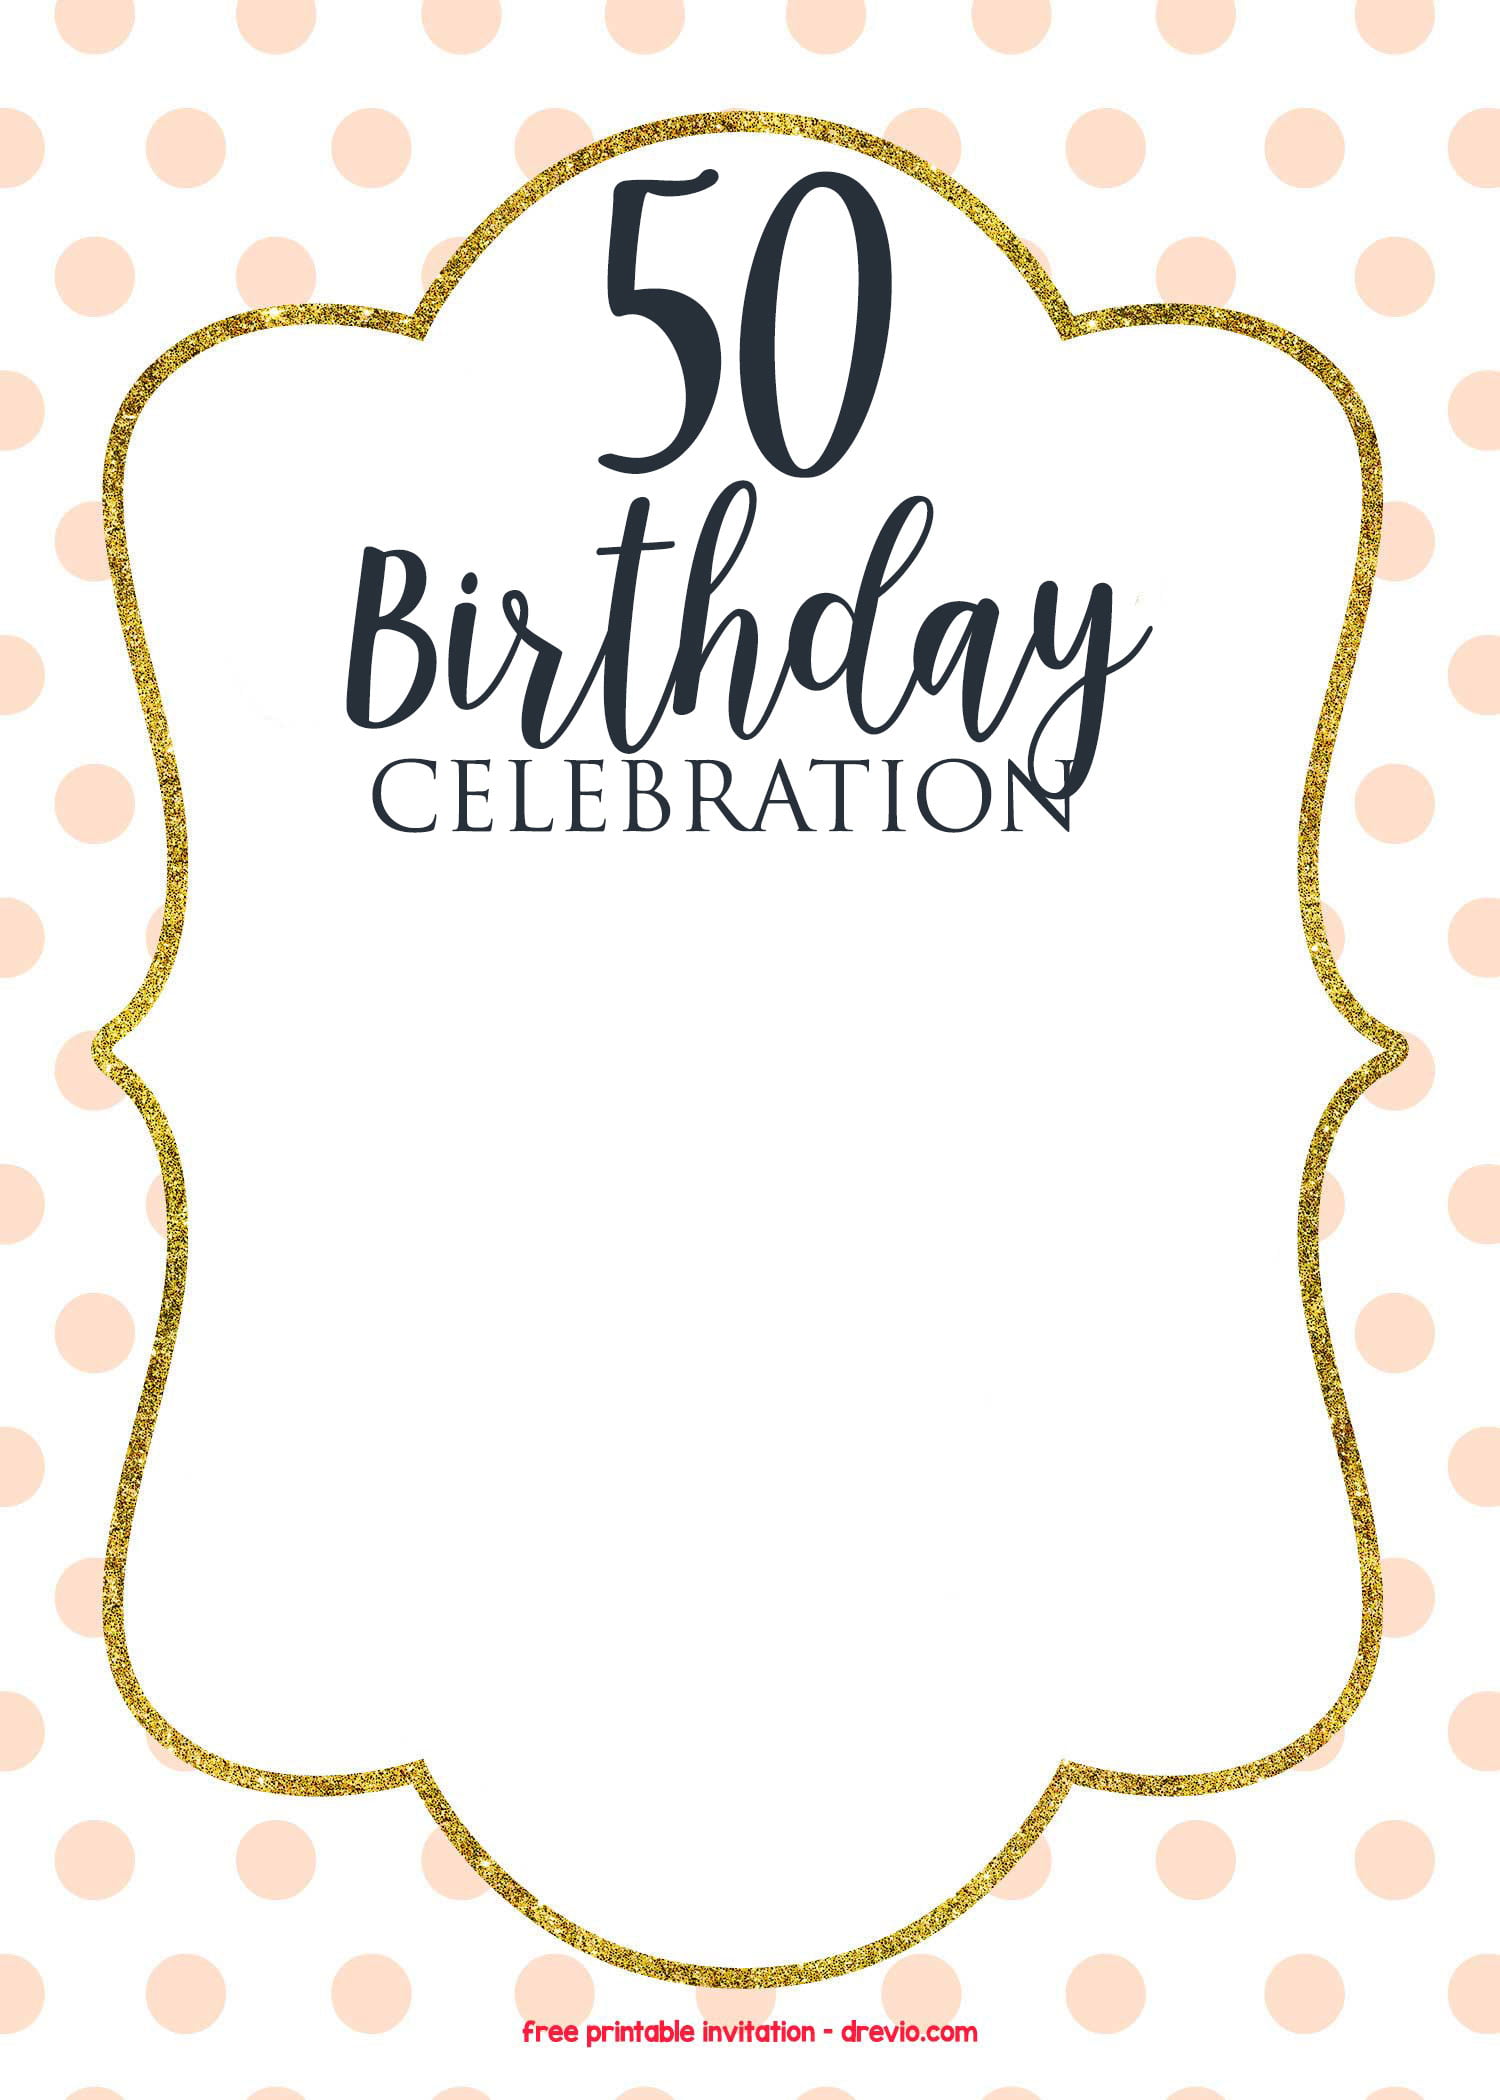 50th Birthday Invitations Online FREE PRINTABLE Birthday Invitation Templates